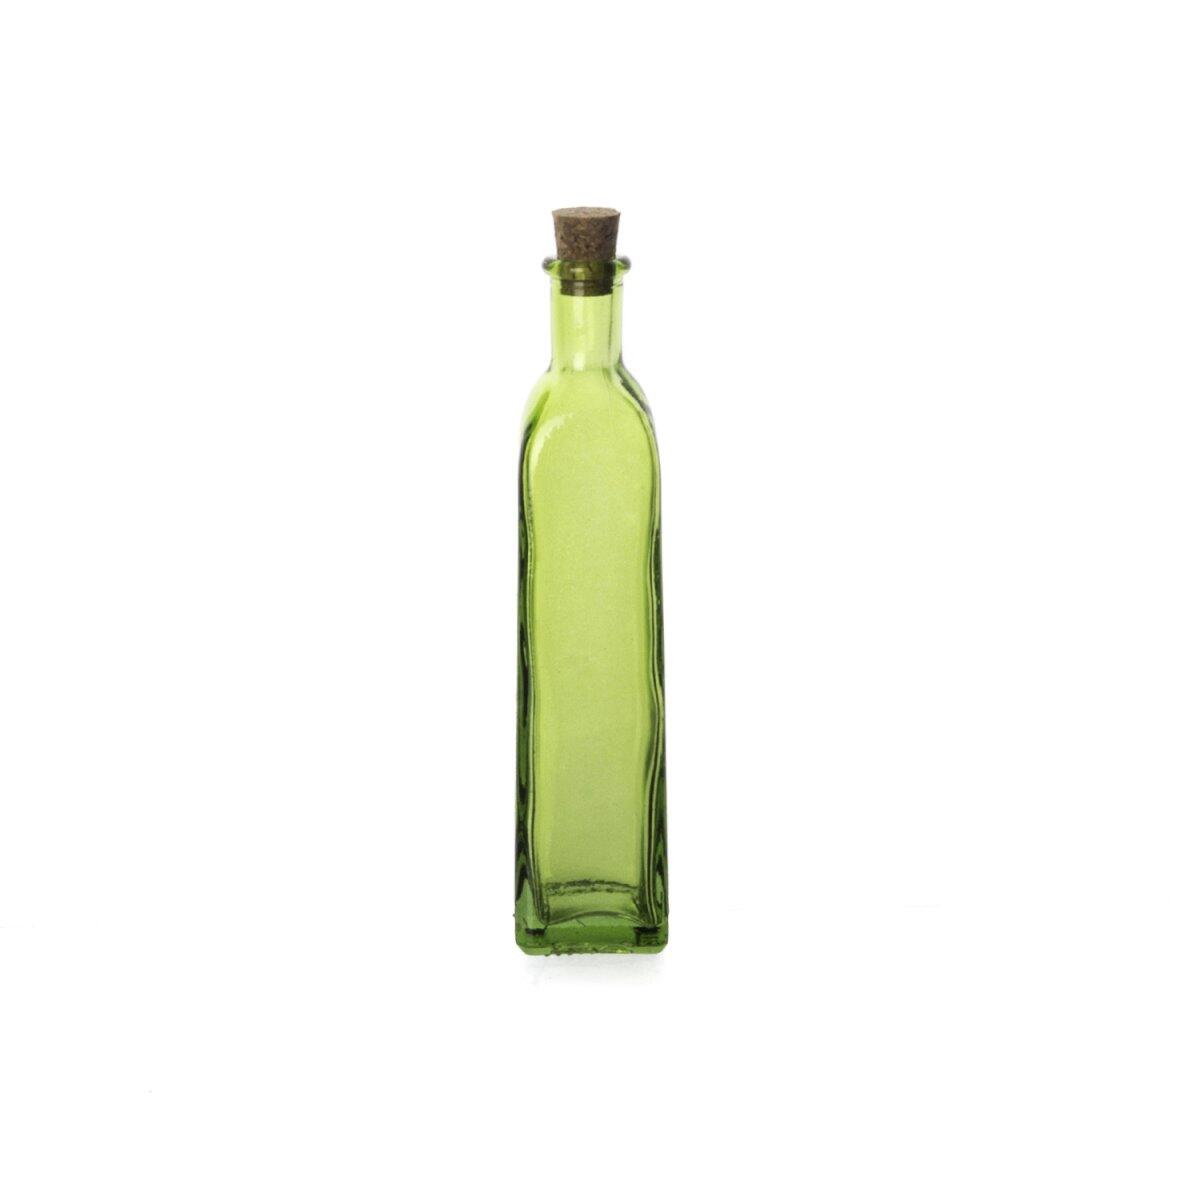 Sanmiguel Fragola Oil Bottle 120 ml